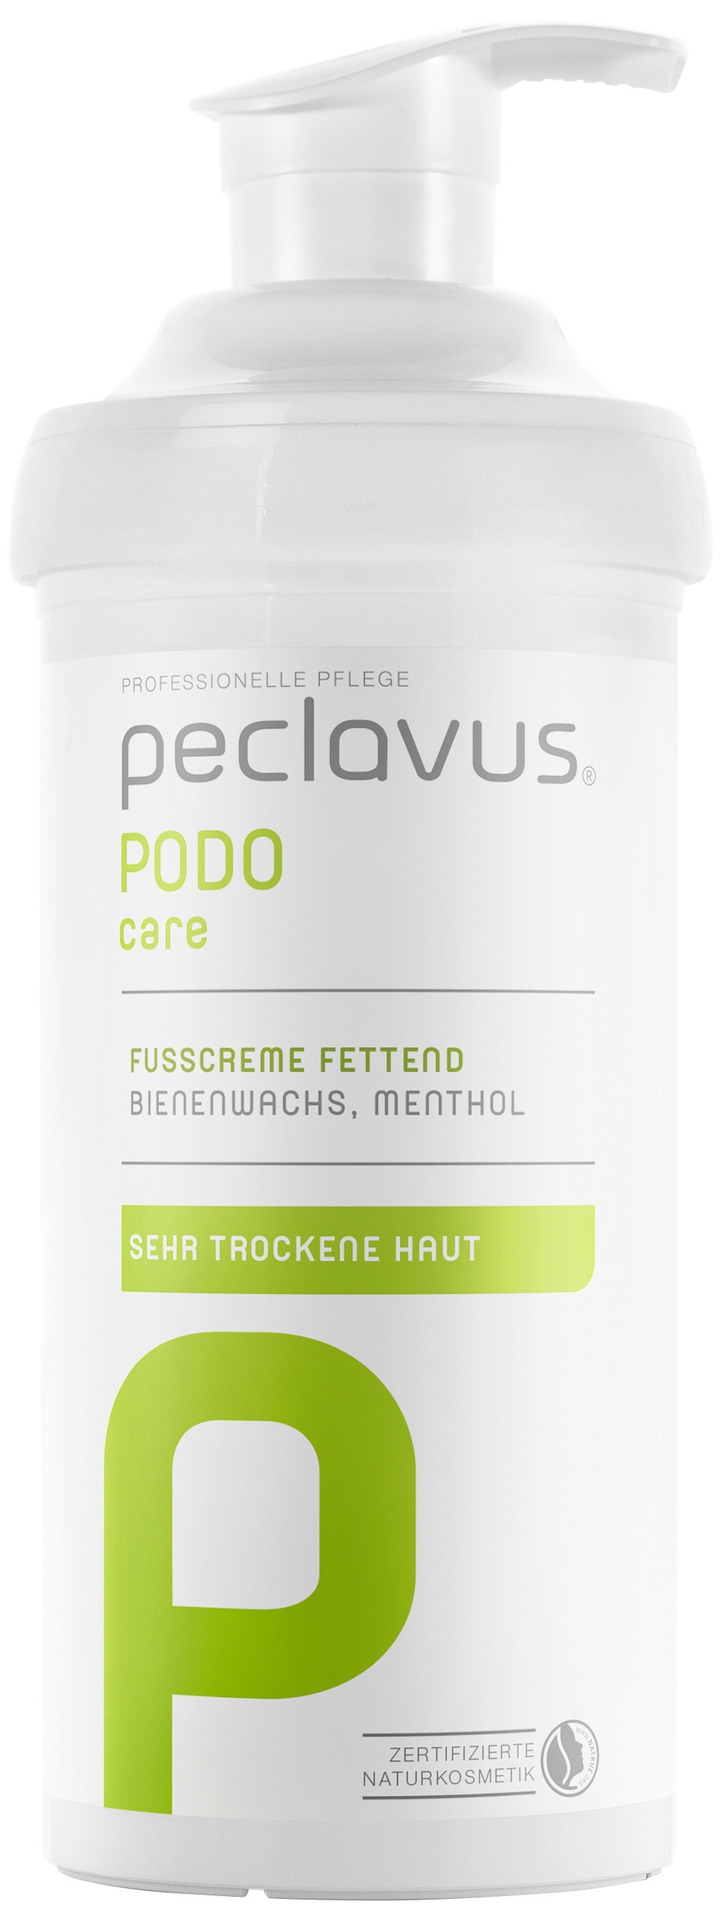 Peclavus PODOcare Fußcreme fettend | 500 ml